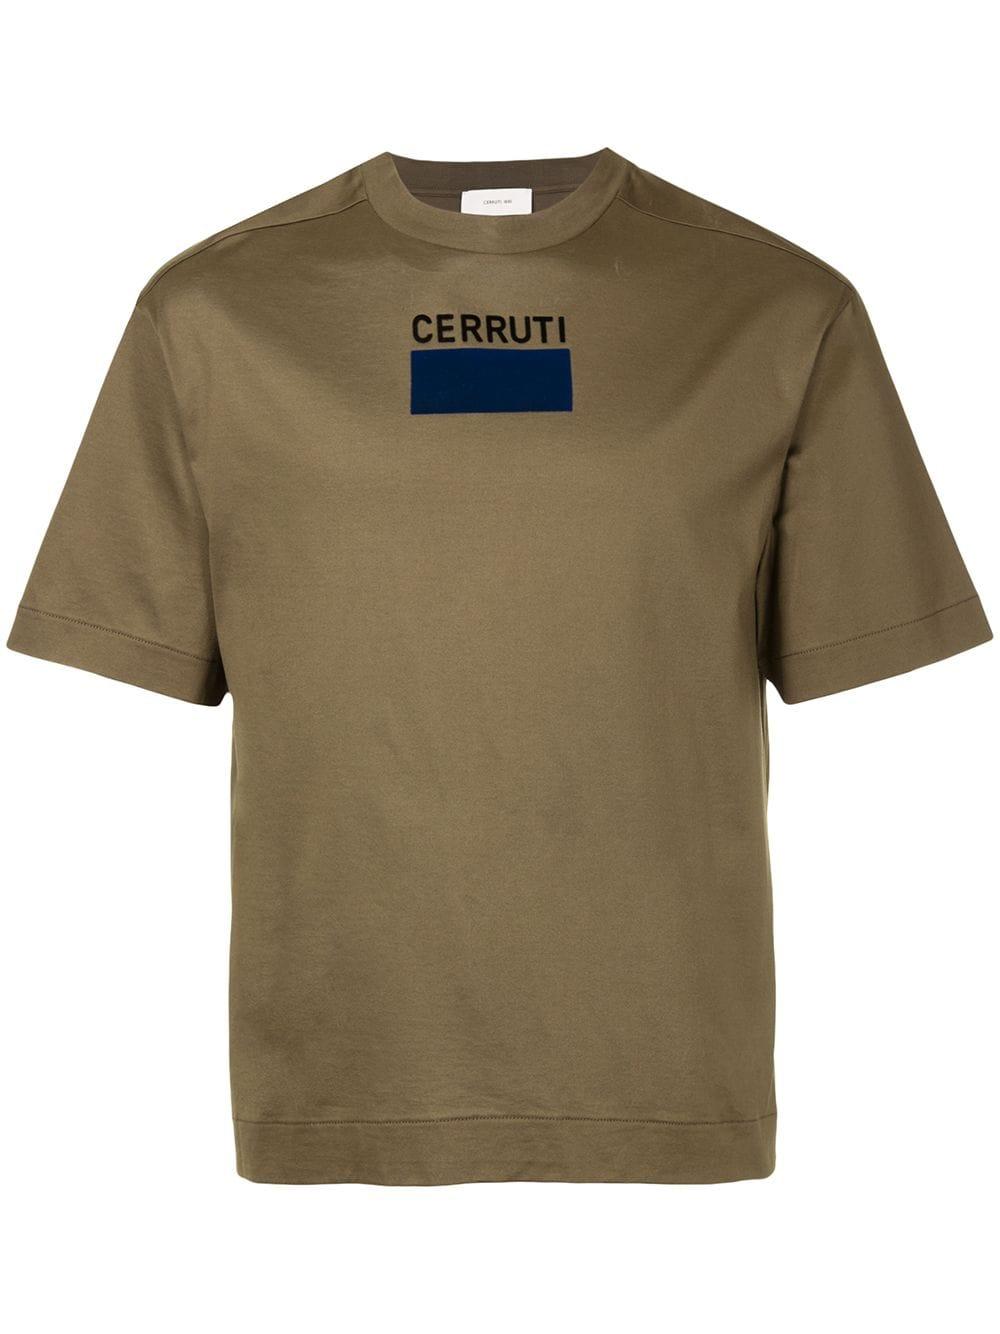 Cerruti 1881 Cotton Logo Print T-shirt in Green for Men - Lyst